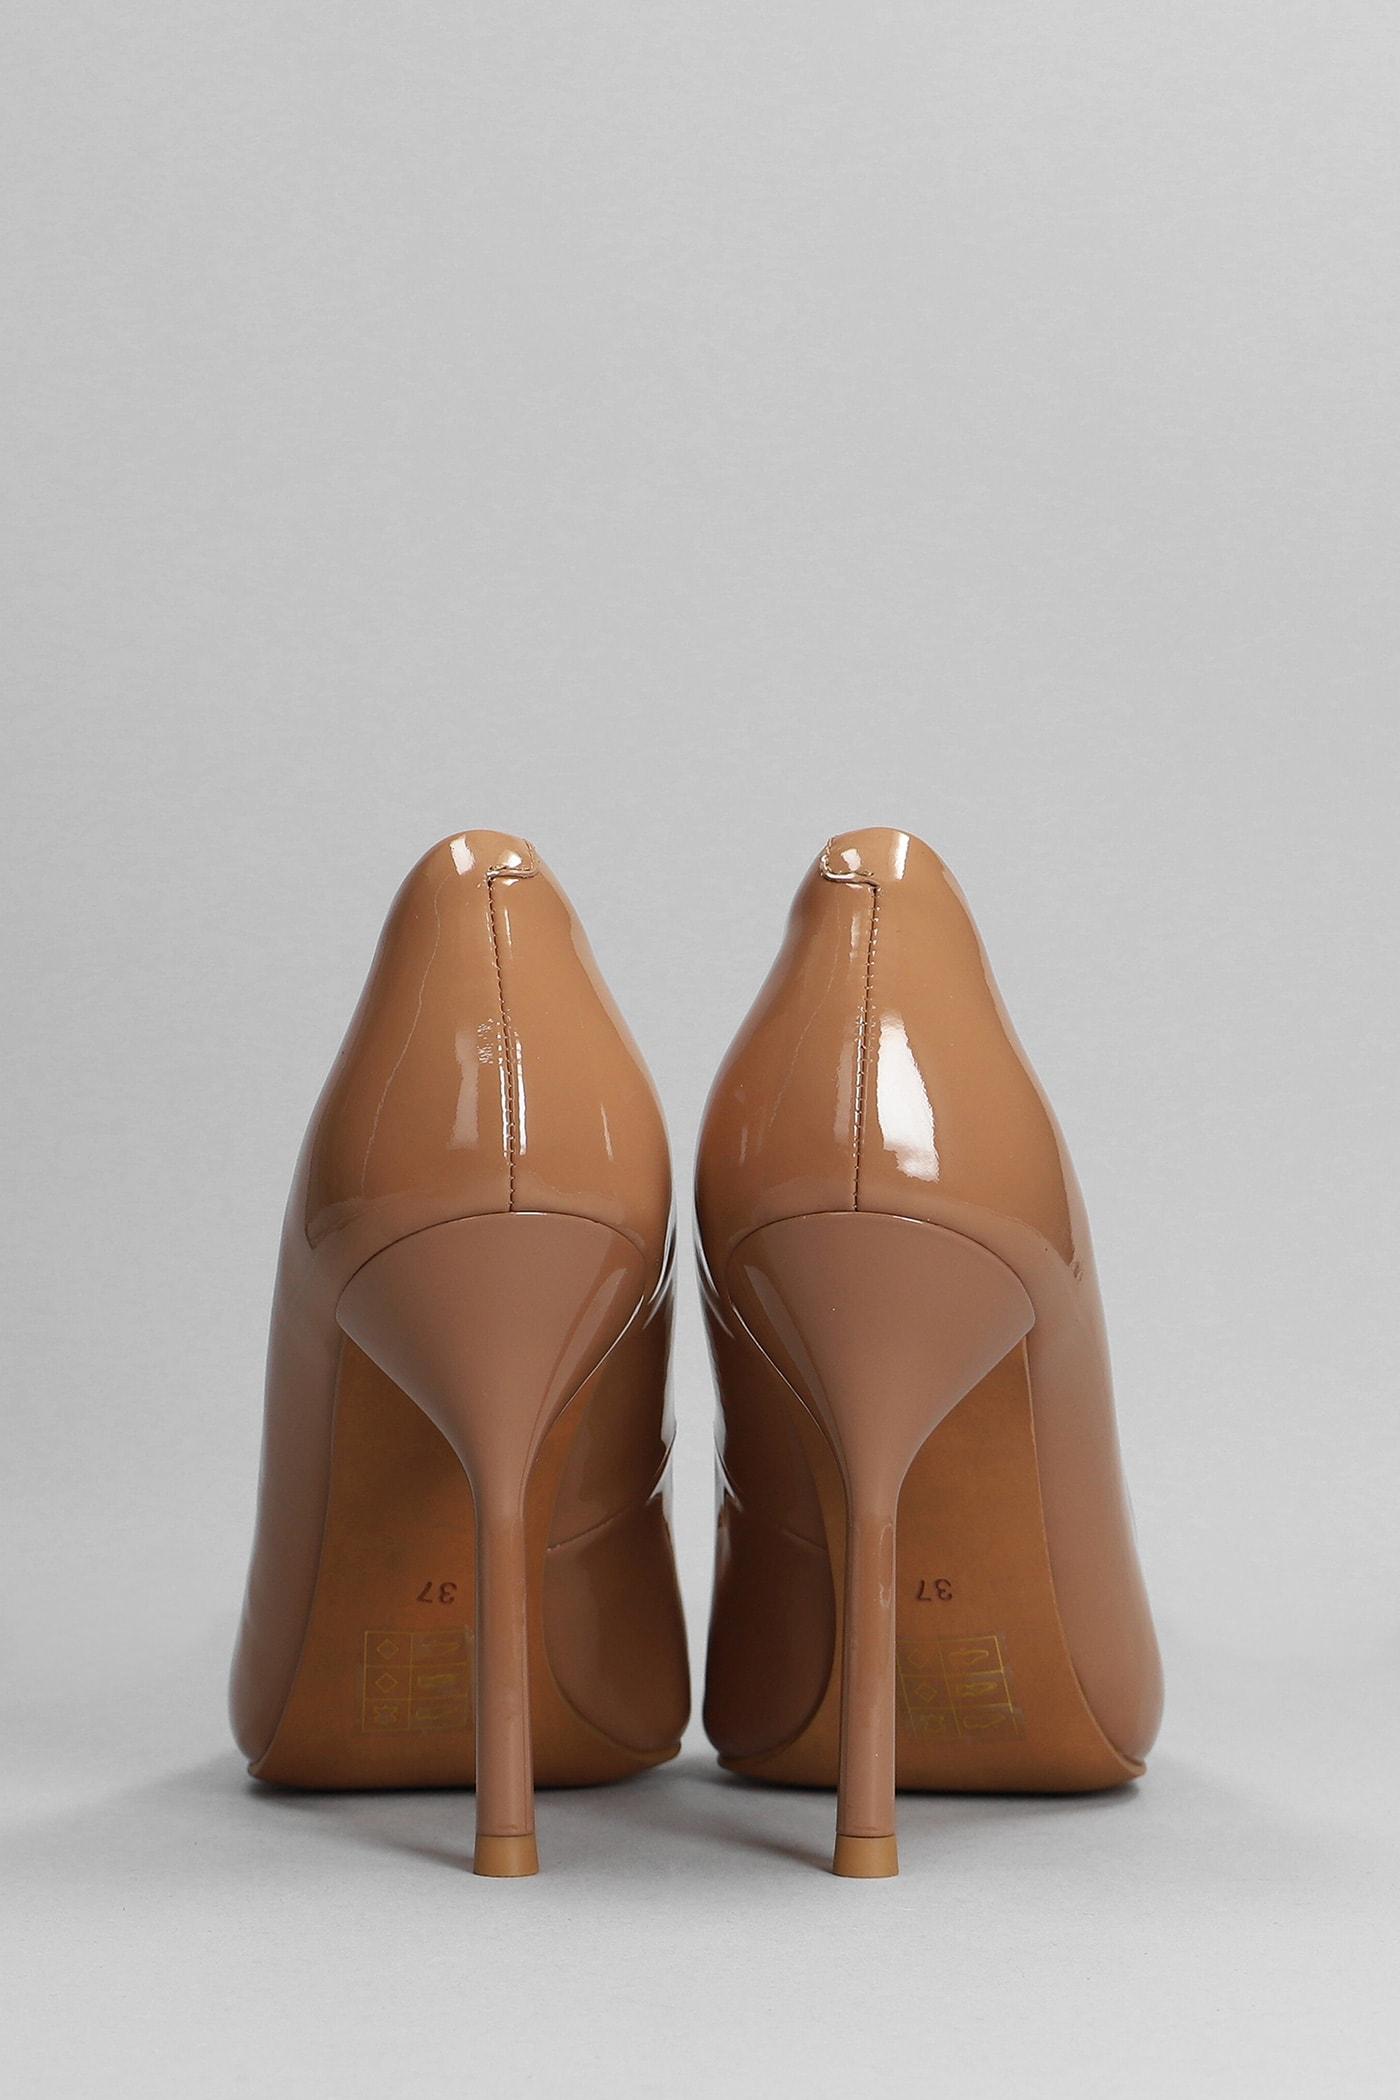 Tahari 6.5 Marie Light Brown Camel Patent Leather Peep Toe Heels Work  Cocktail | eBay